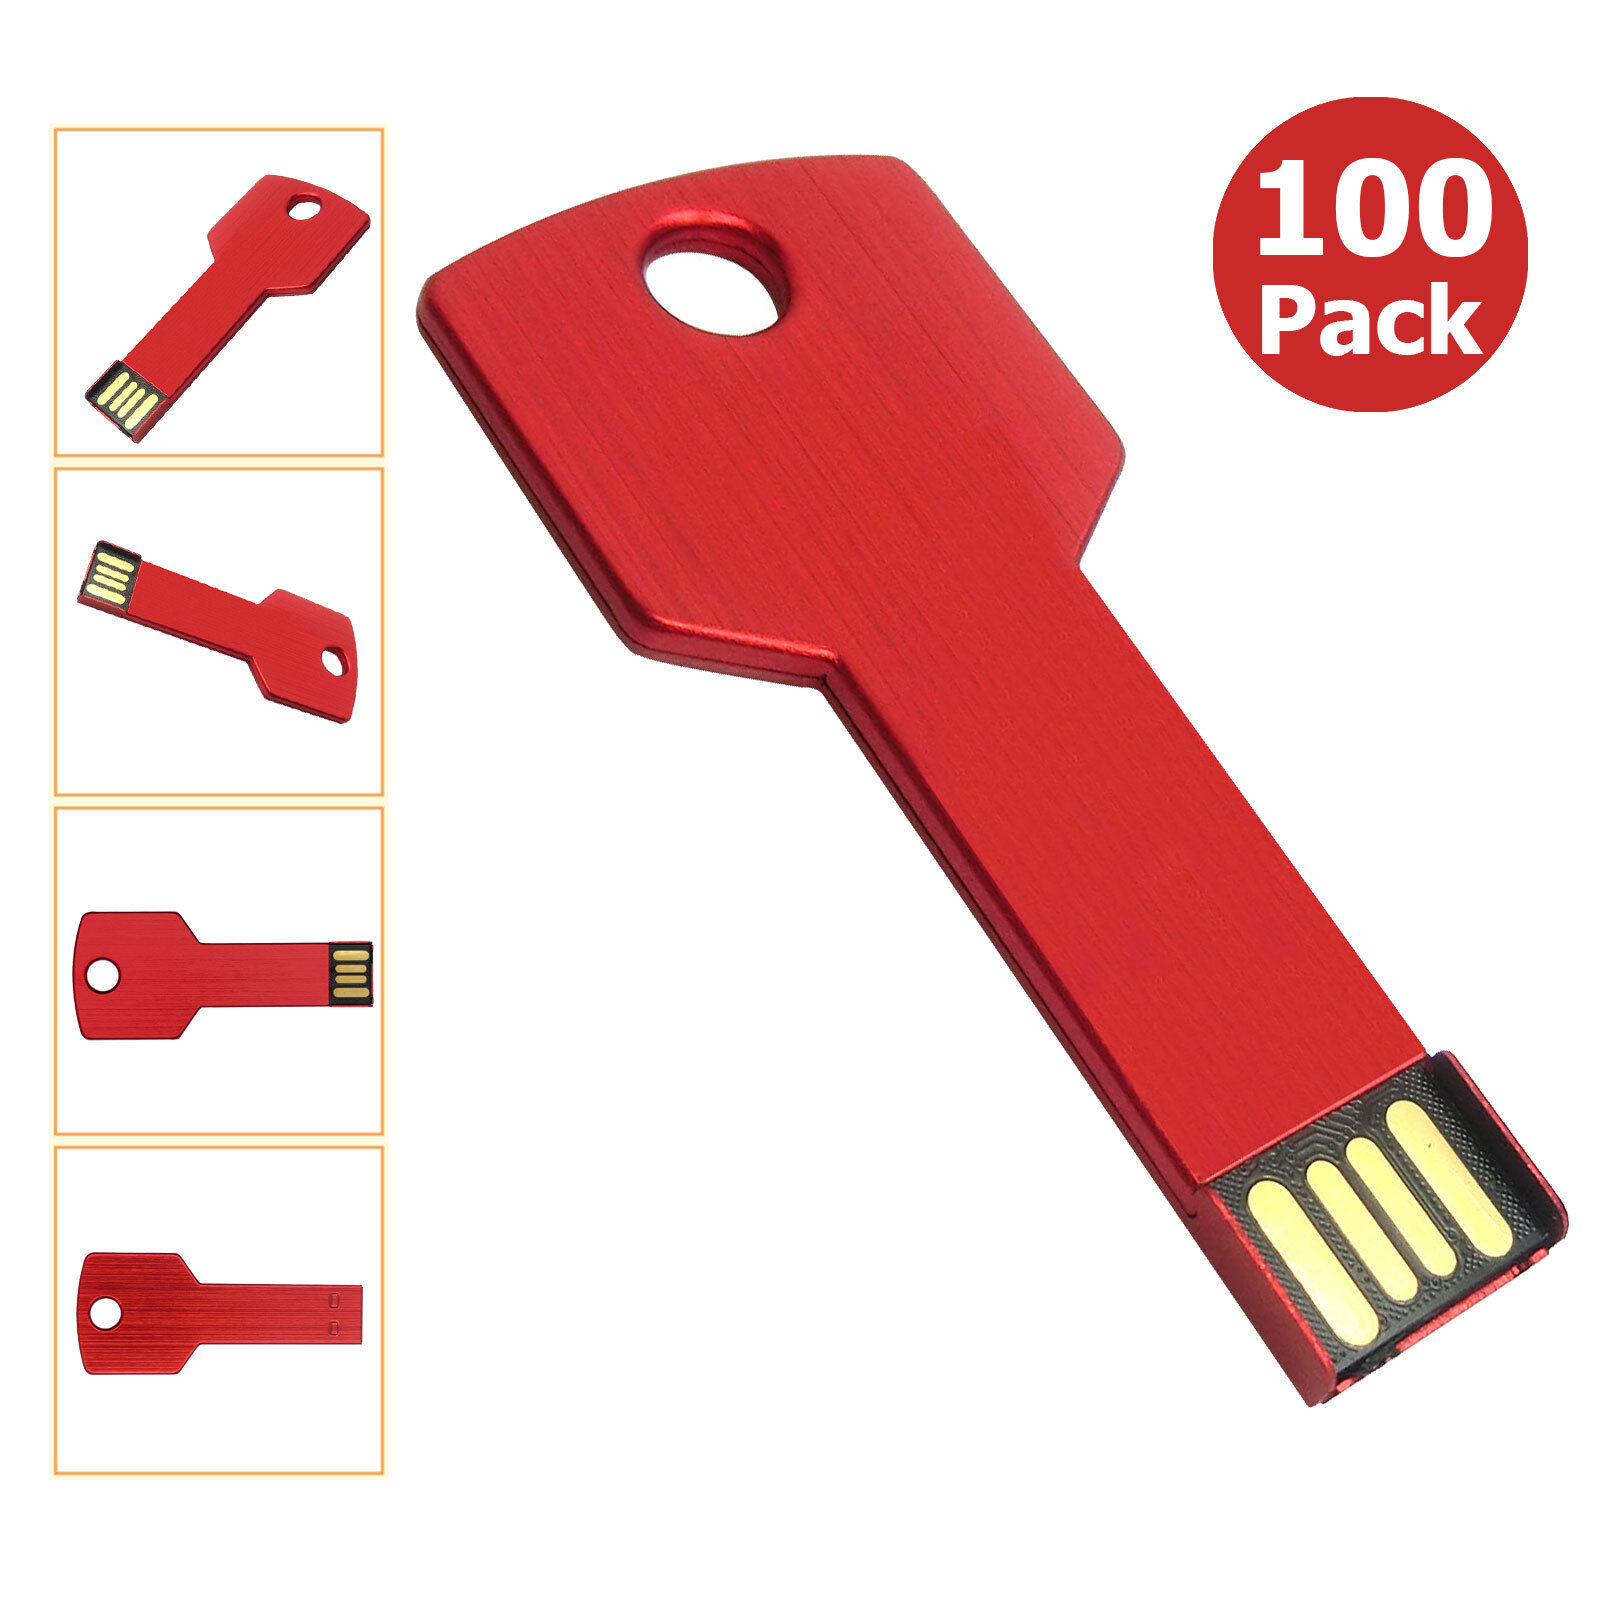 Kootion 100 Pack 32GB USB 2.0 Flash Drive Memory Stick Wholesale Sale USB Sticks